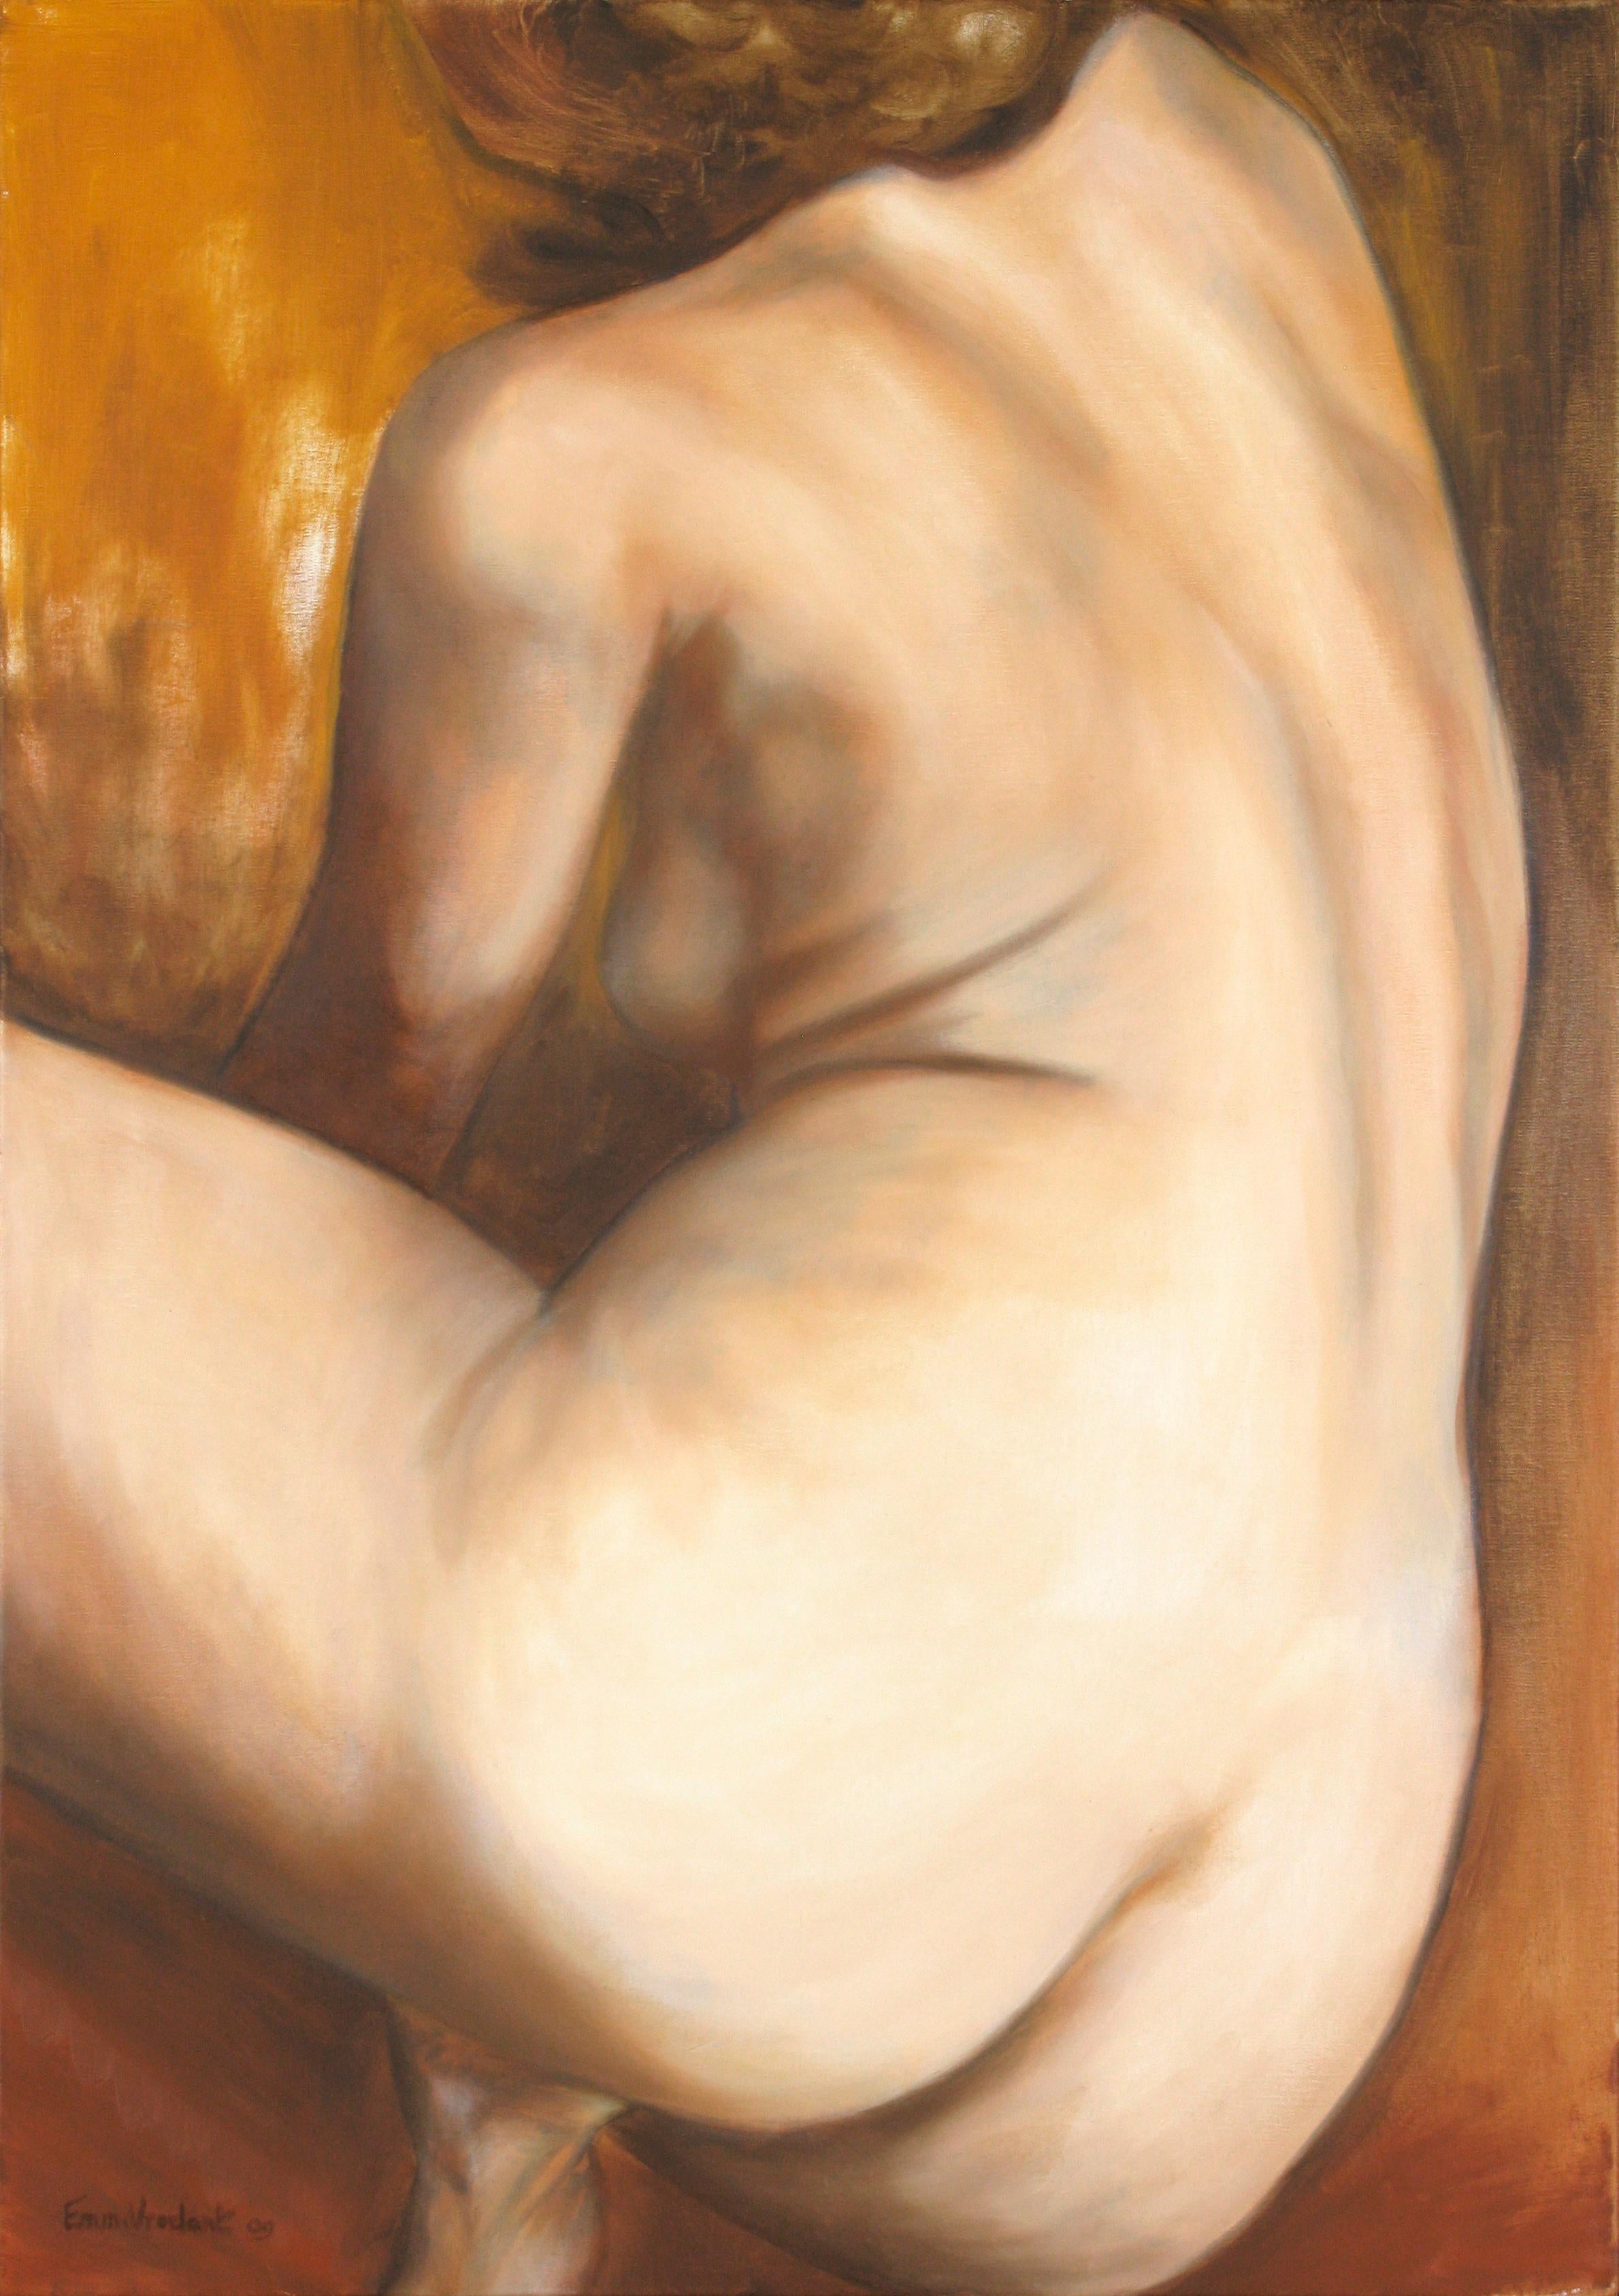 Emmanuelle Vroelant Nude Painting - "Curves" figuratif nude oil on linen canvas 92x65cm 2009